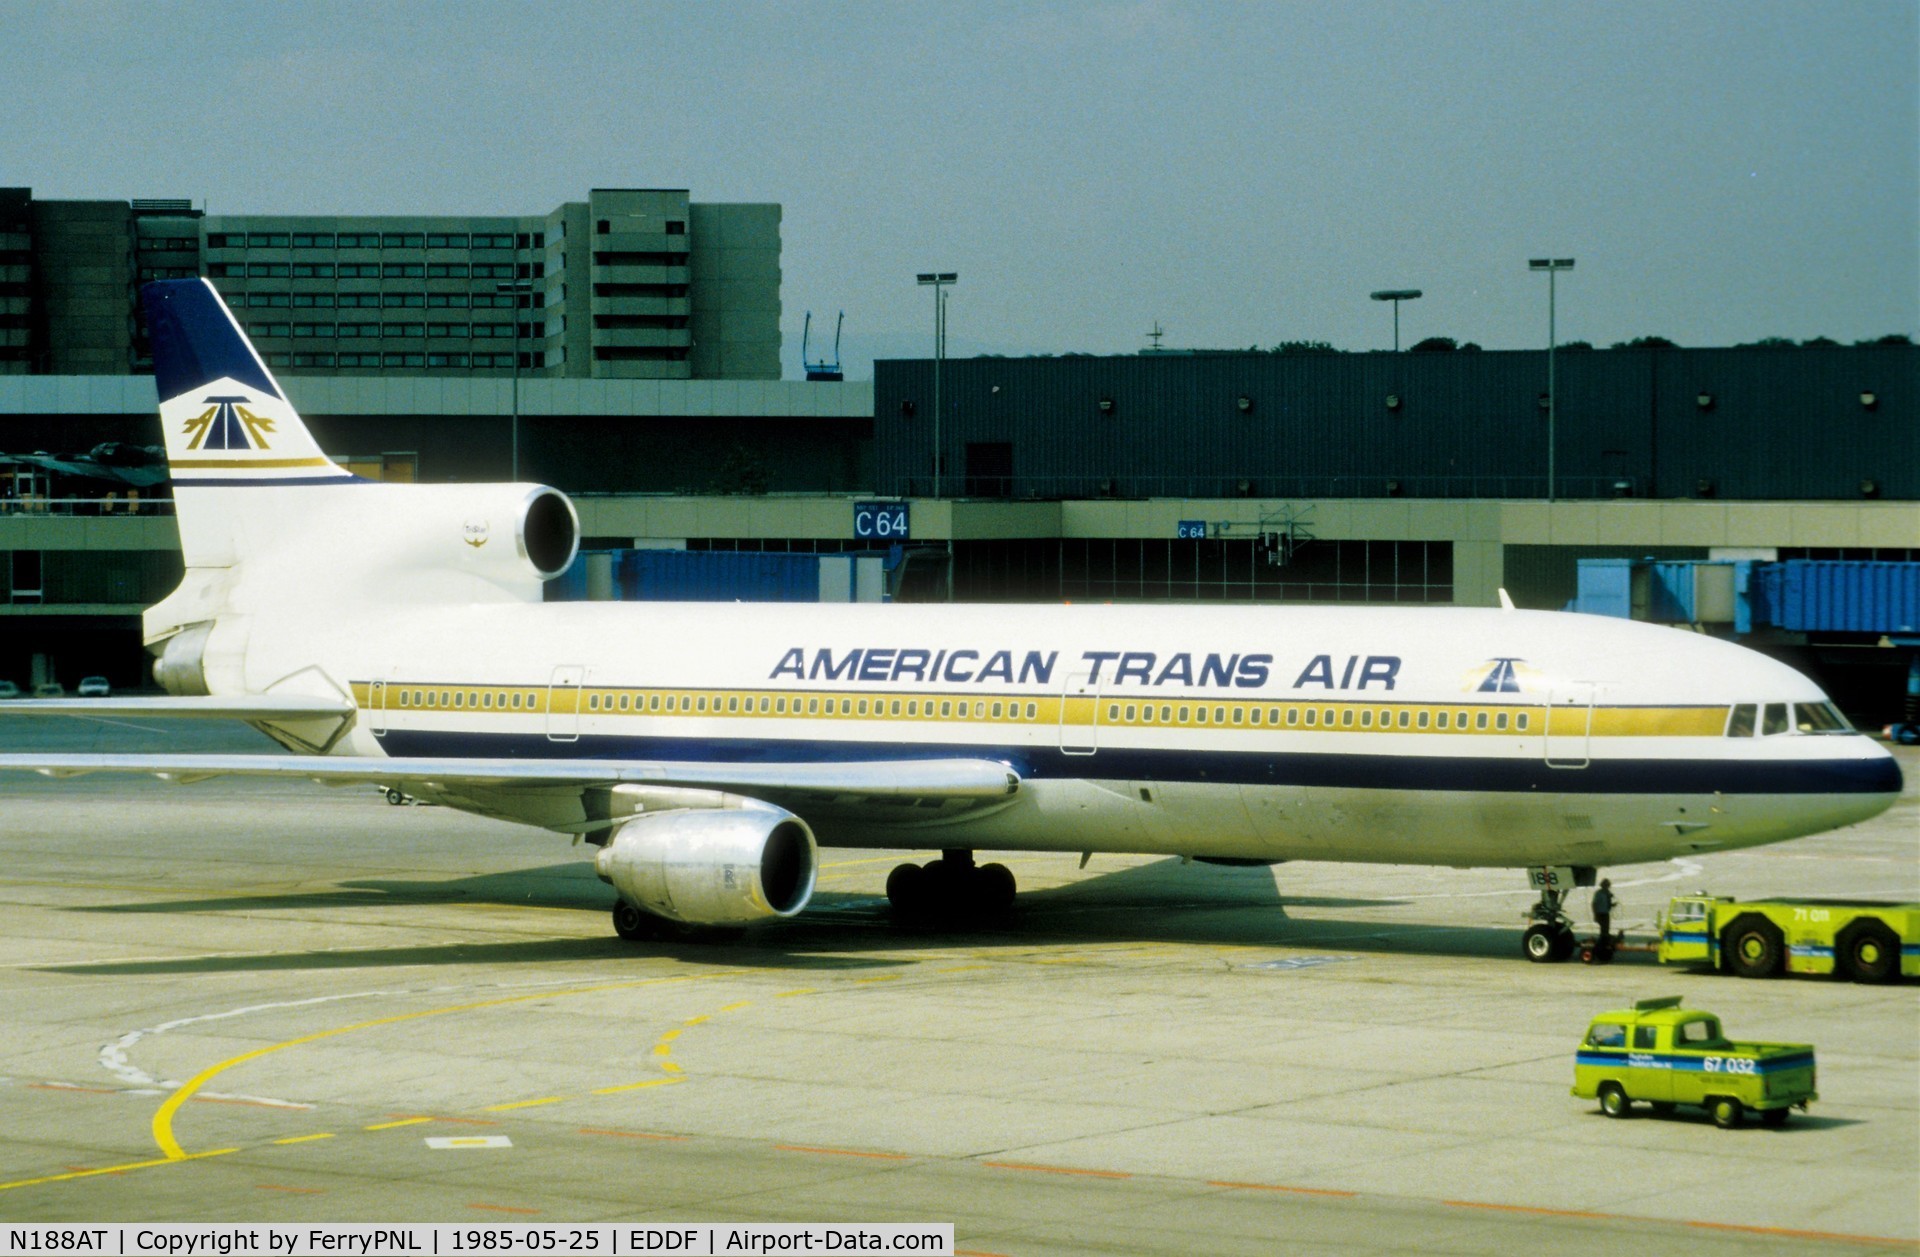 N188AT, 1974 Lockheed L-1011-385-1 TriStar 50 C/N 193C-1078, American Trans Air L1011 pushed-back